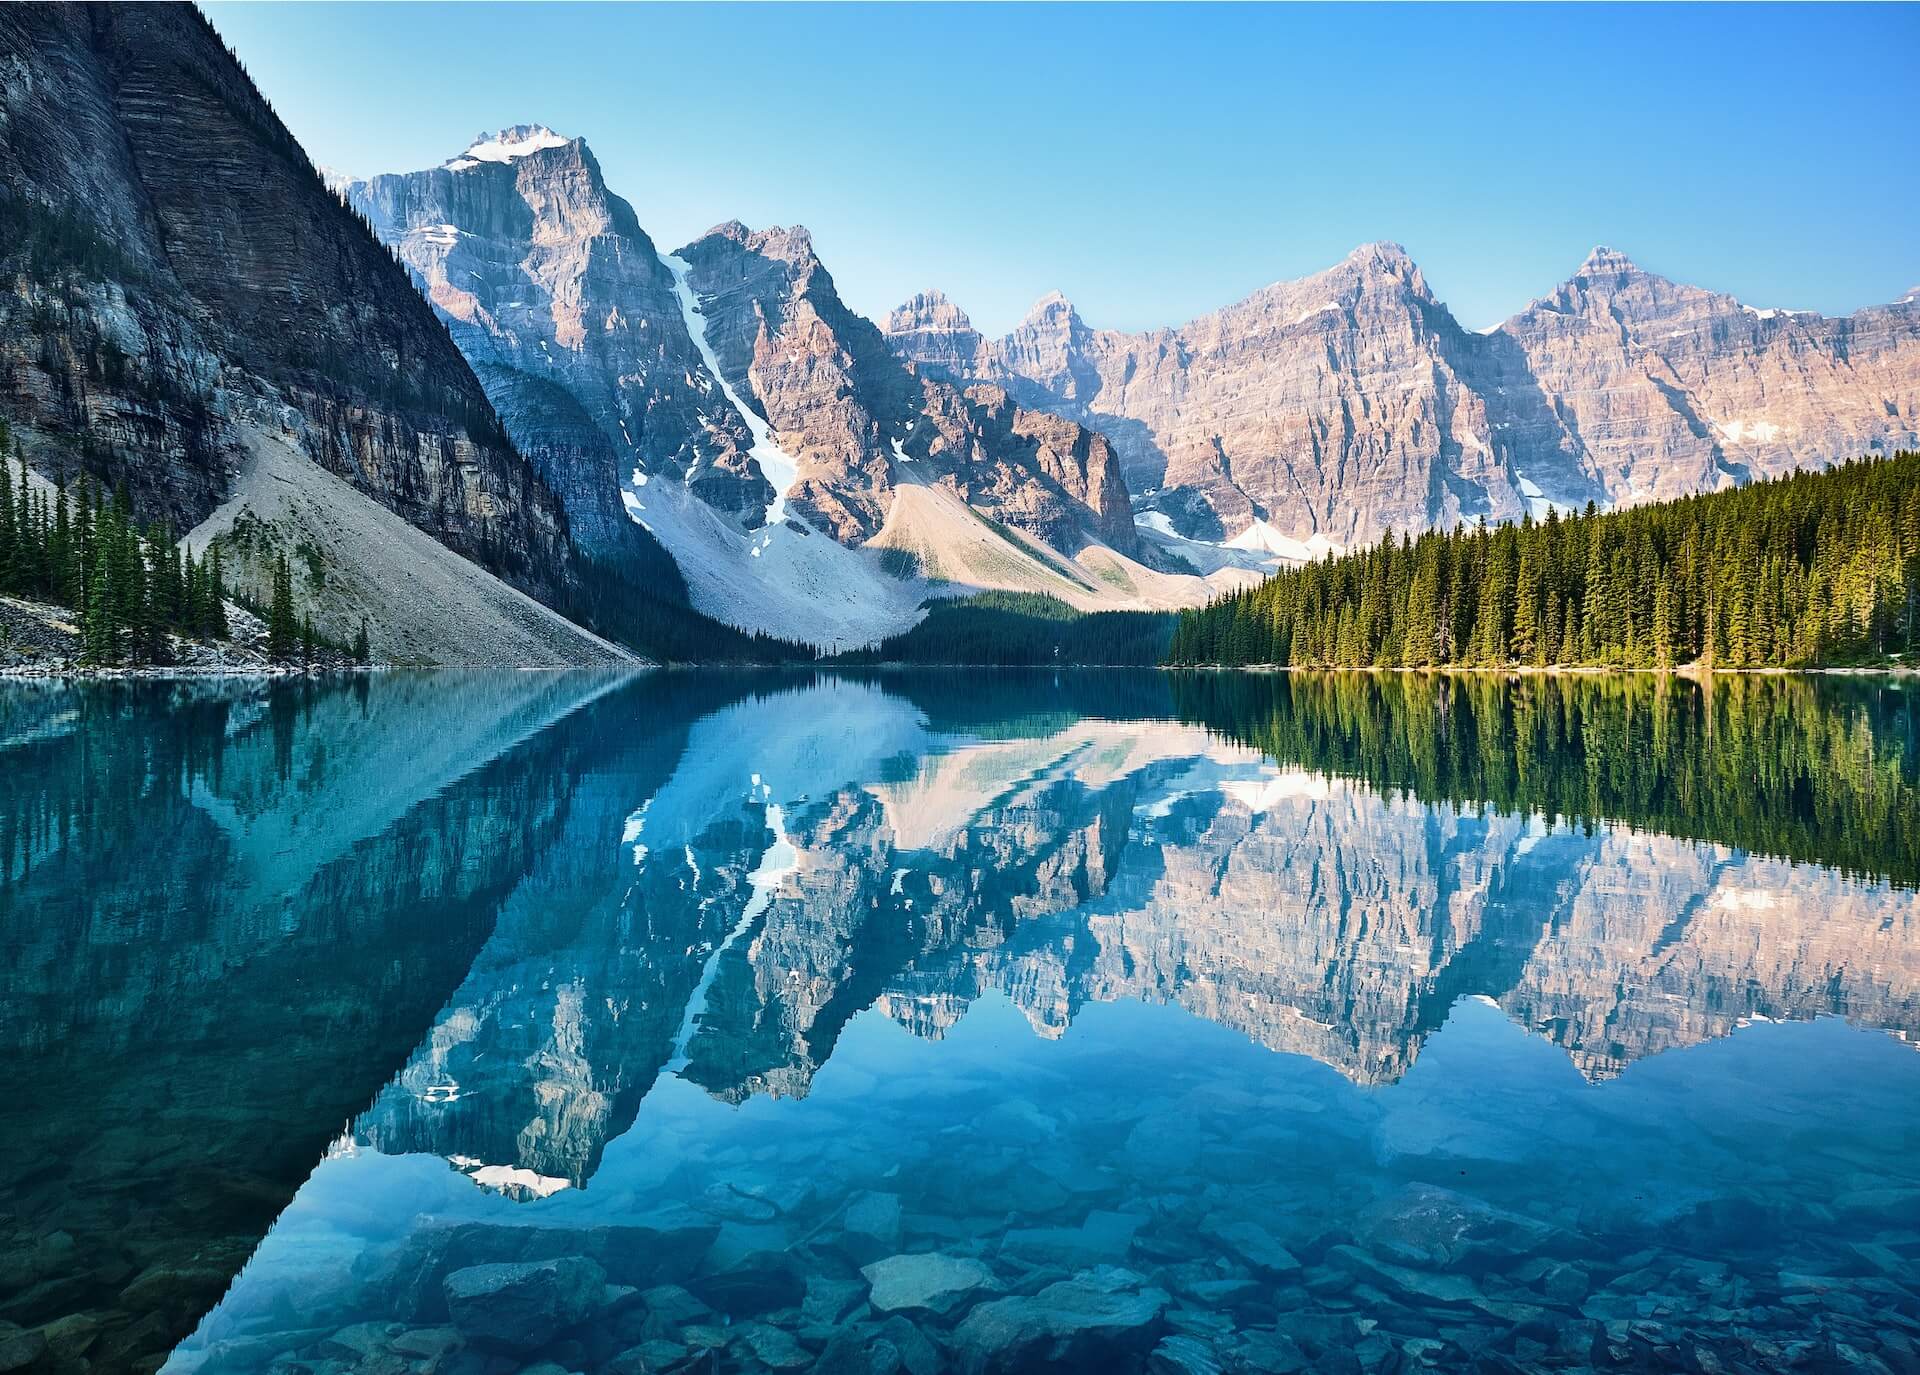 Canada lake and a mountain range